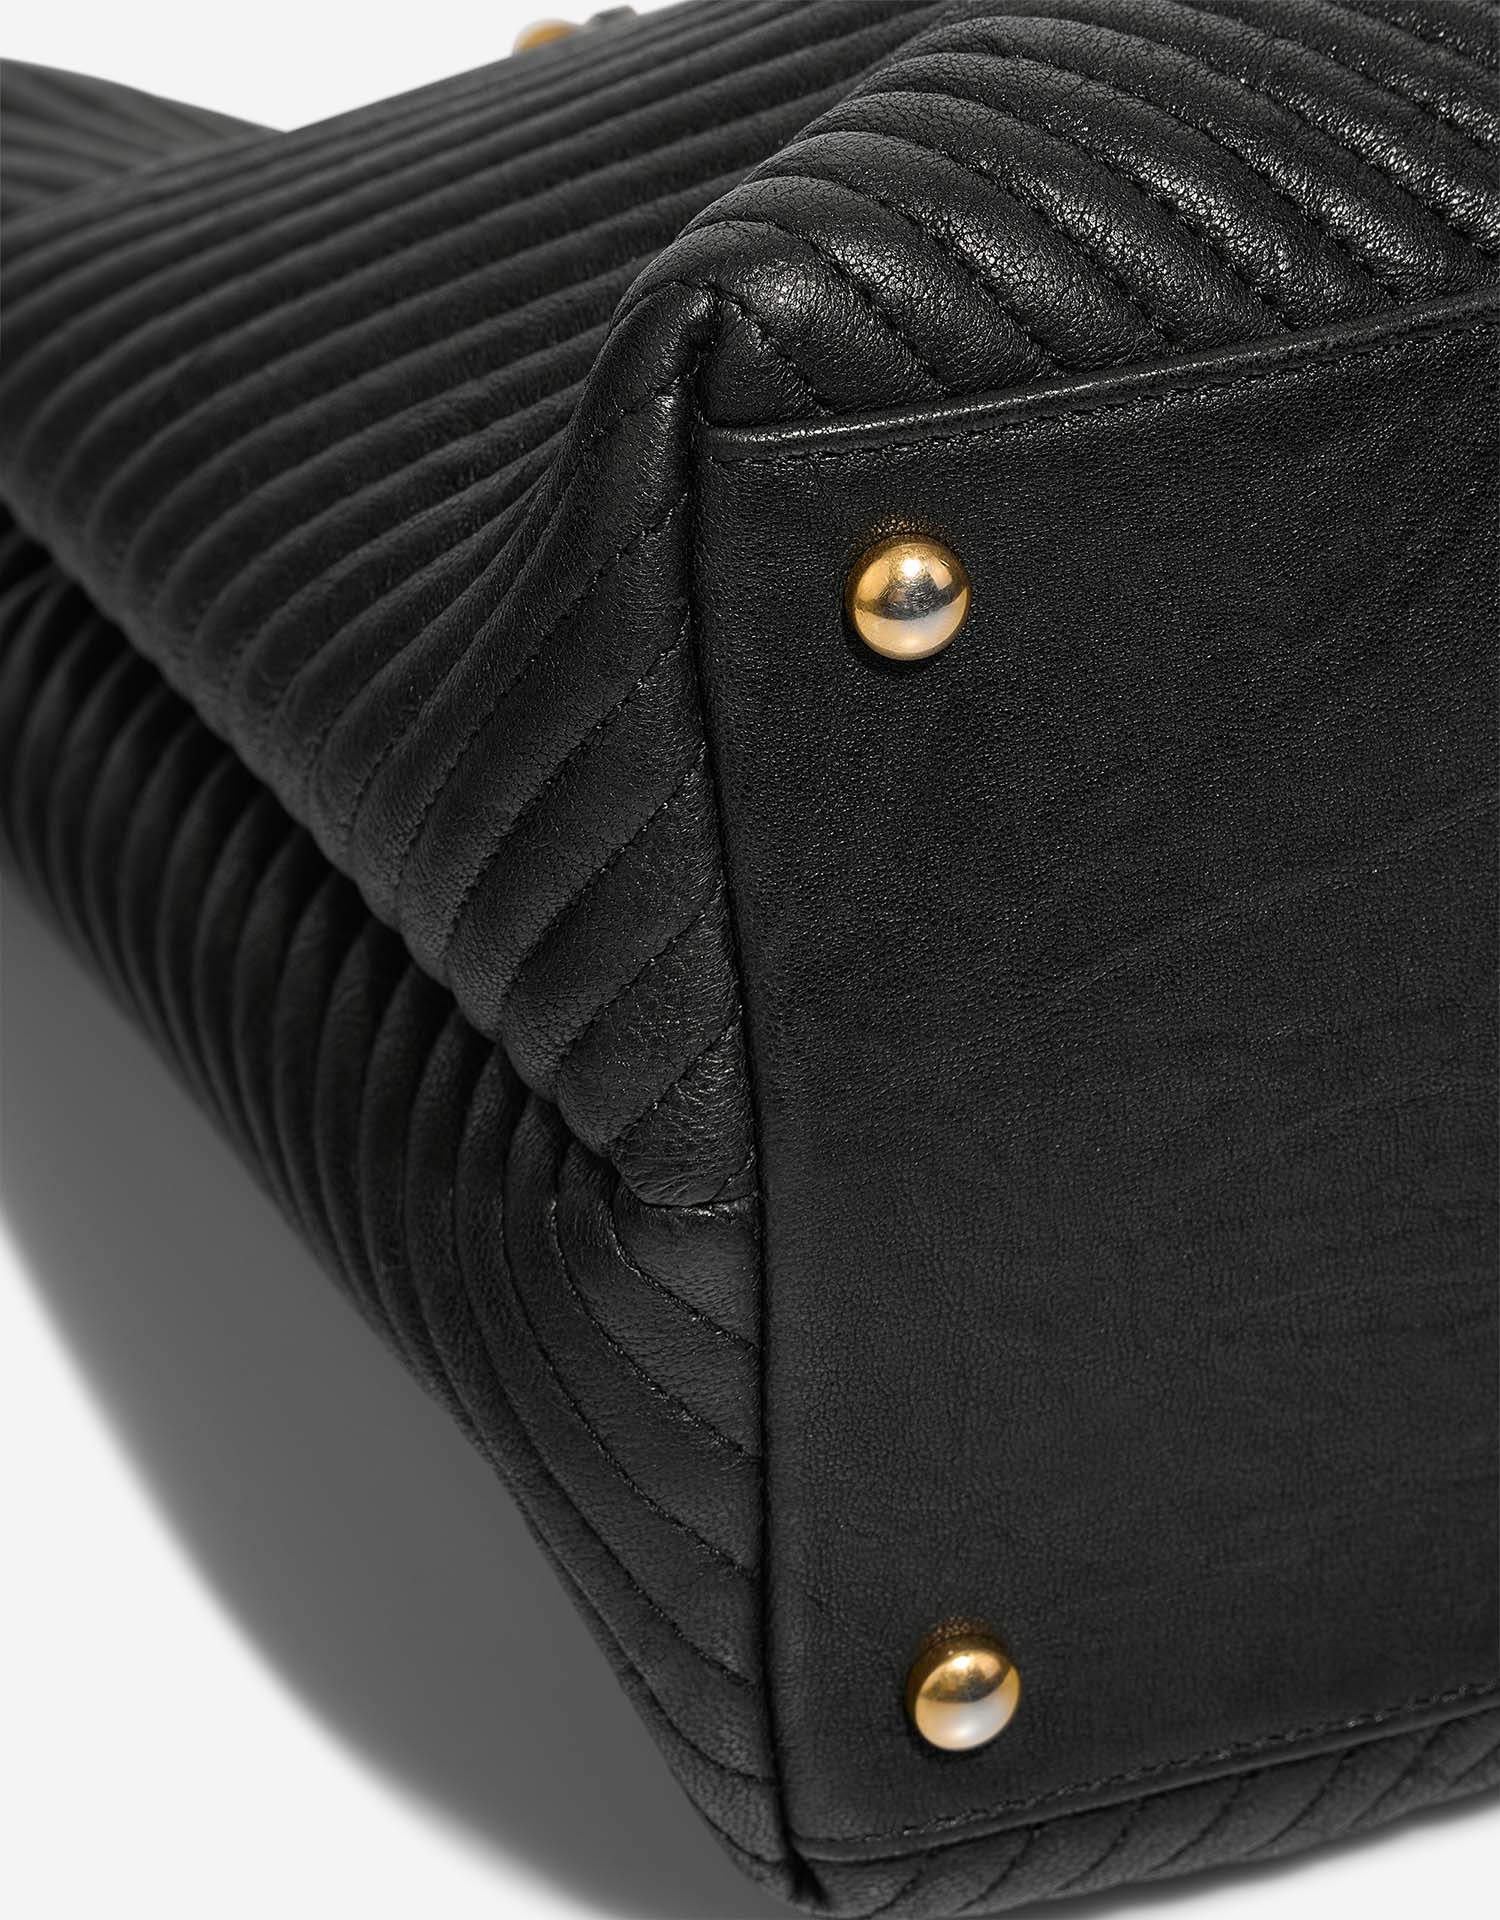 Chanel GST Large Black signs of wear| Sell your designer bag on Saclab.com